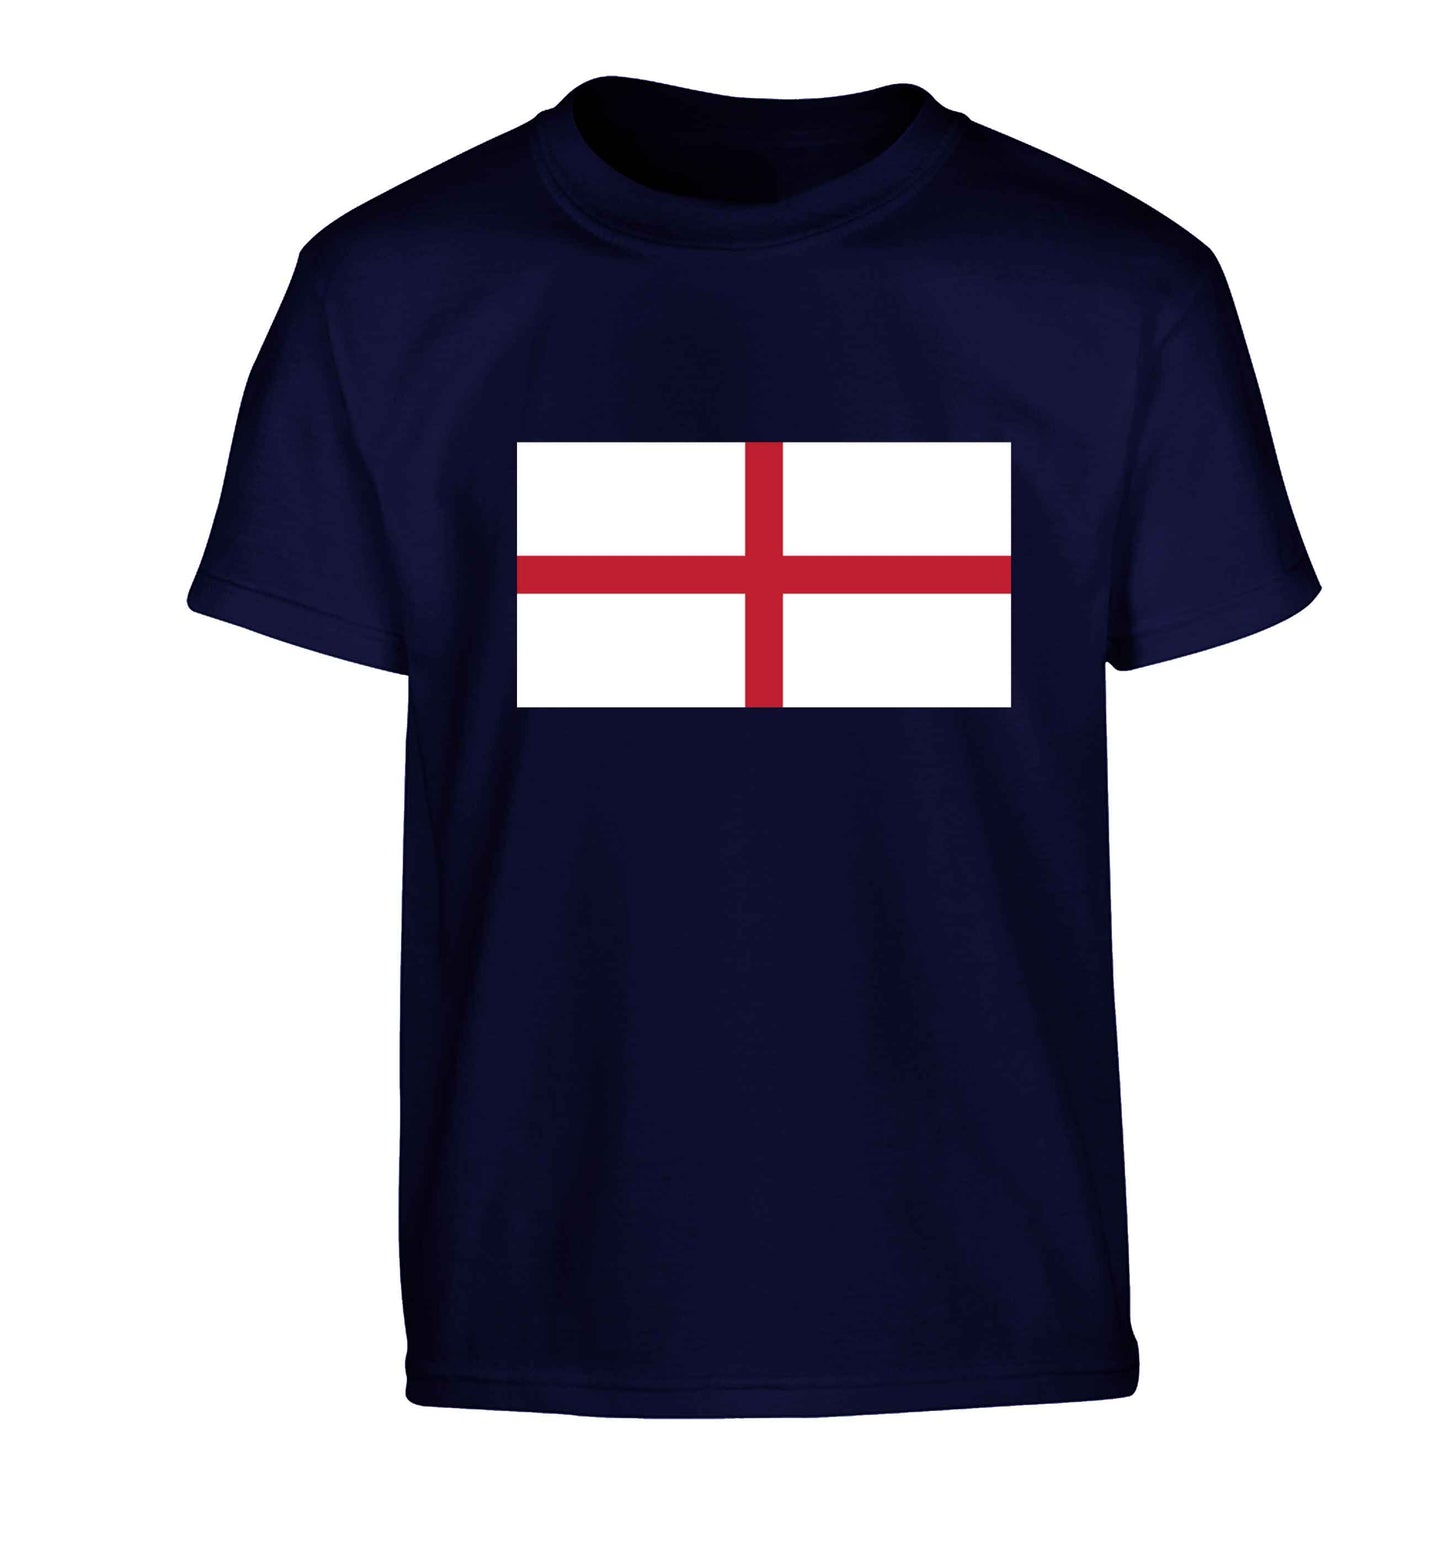 England Flag Children's navy Tshirt 12-13 Years